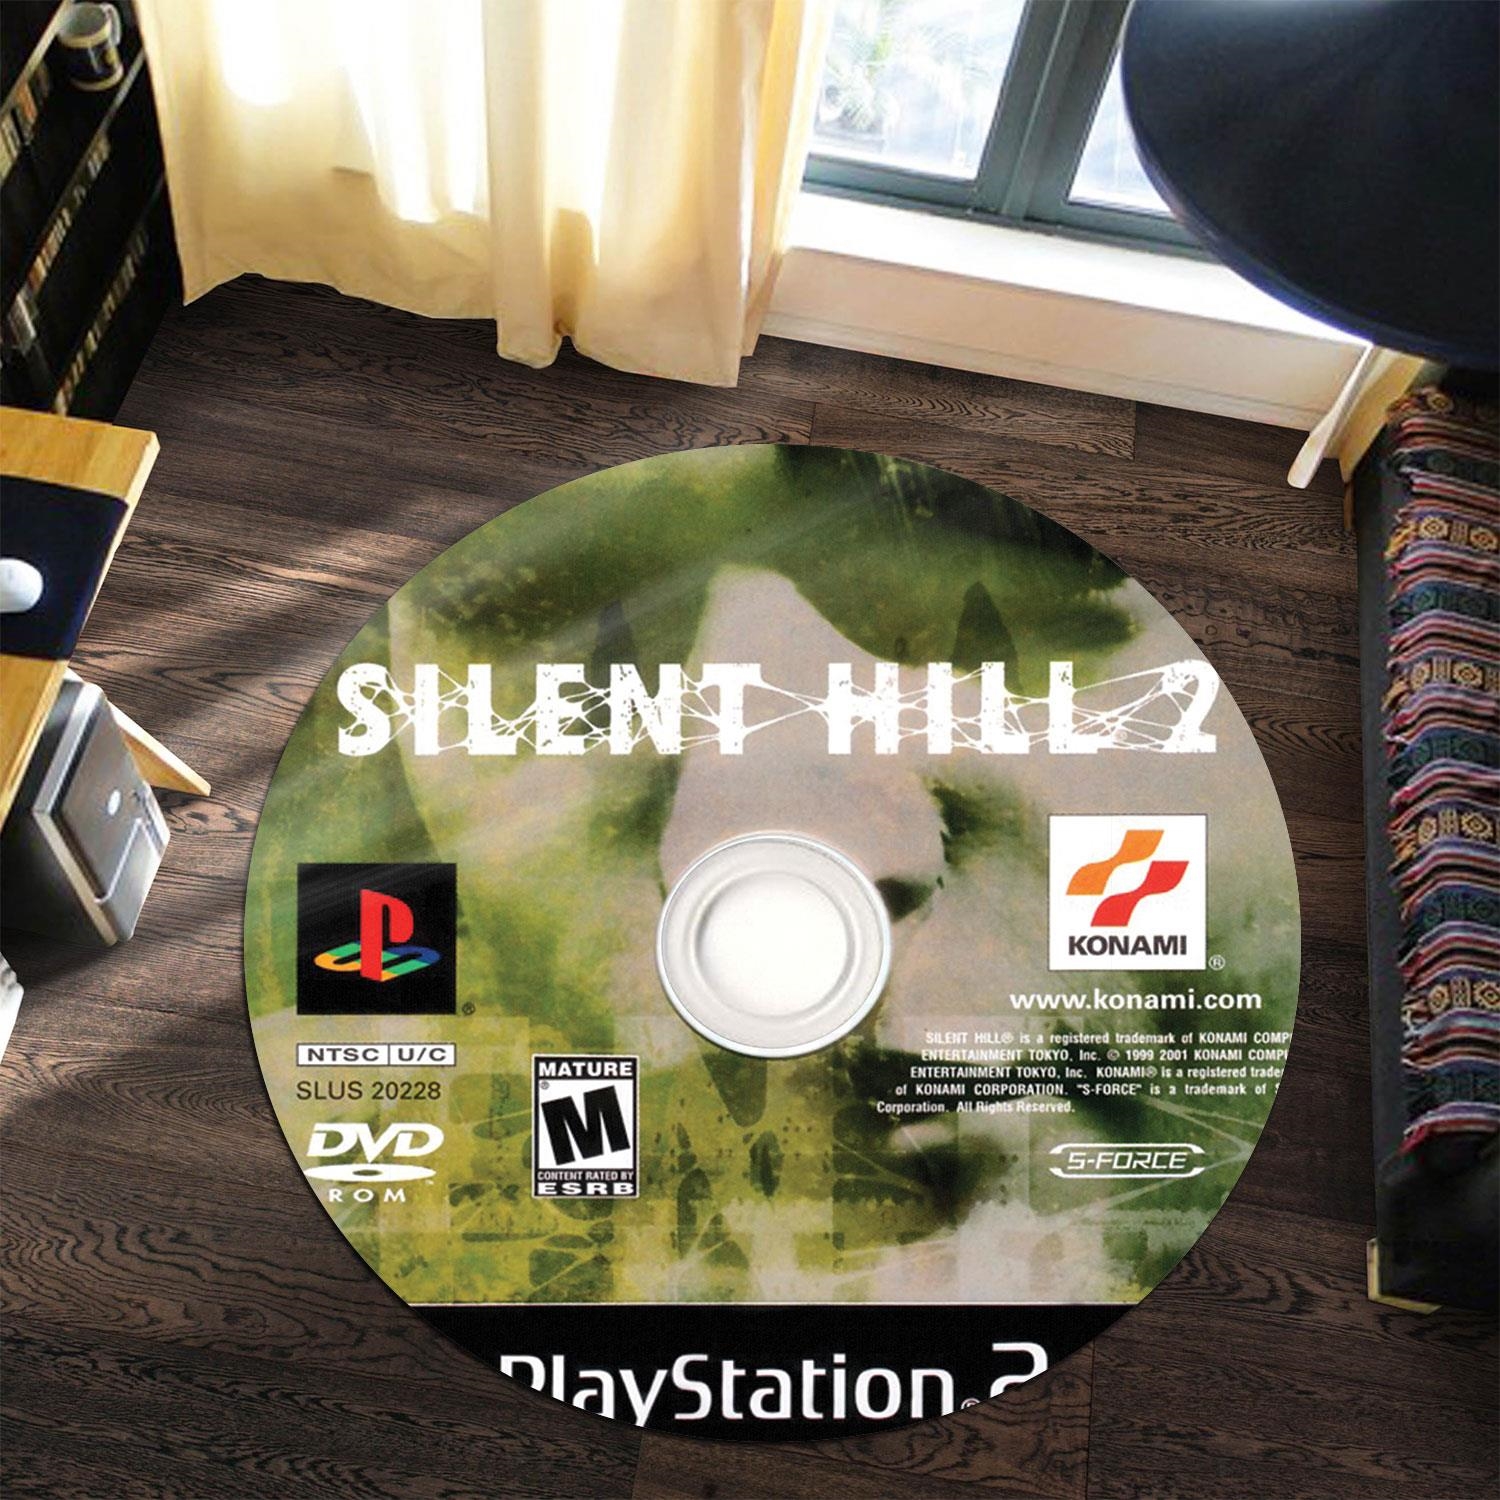 Silent Hill 2 Playstation 2 Konami Disc Round Rug Carpet